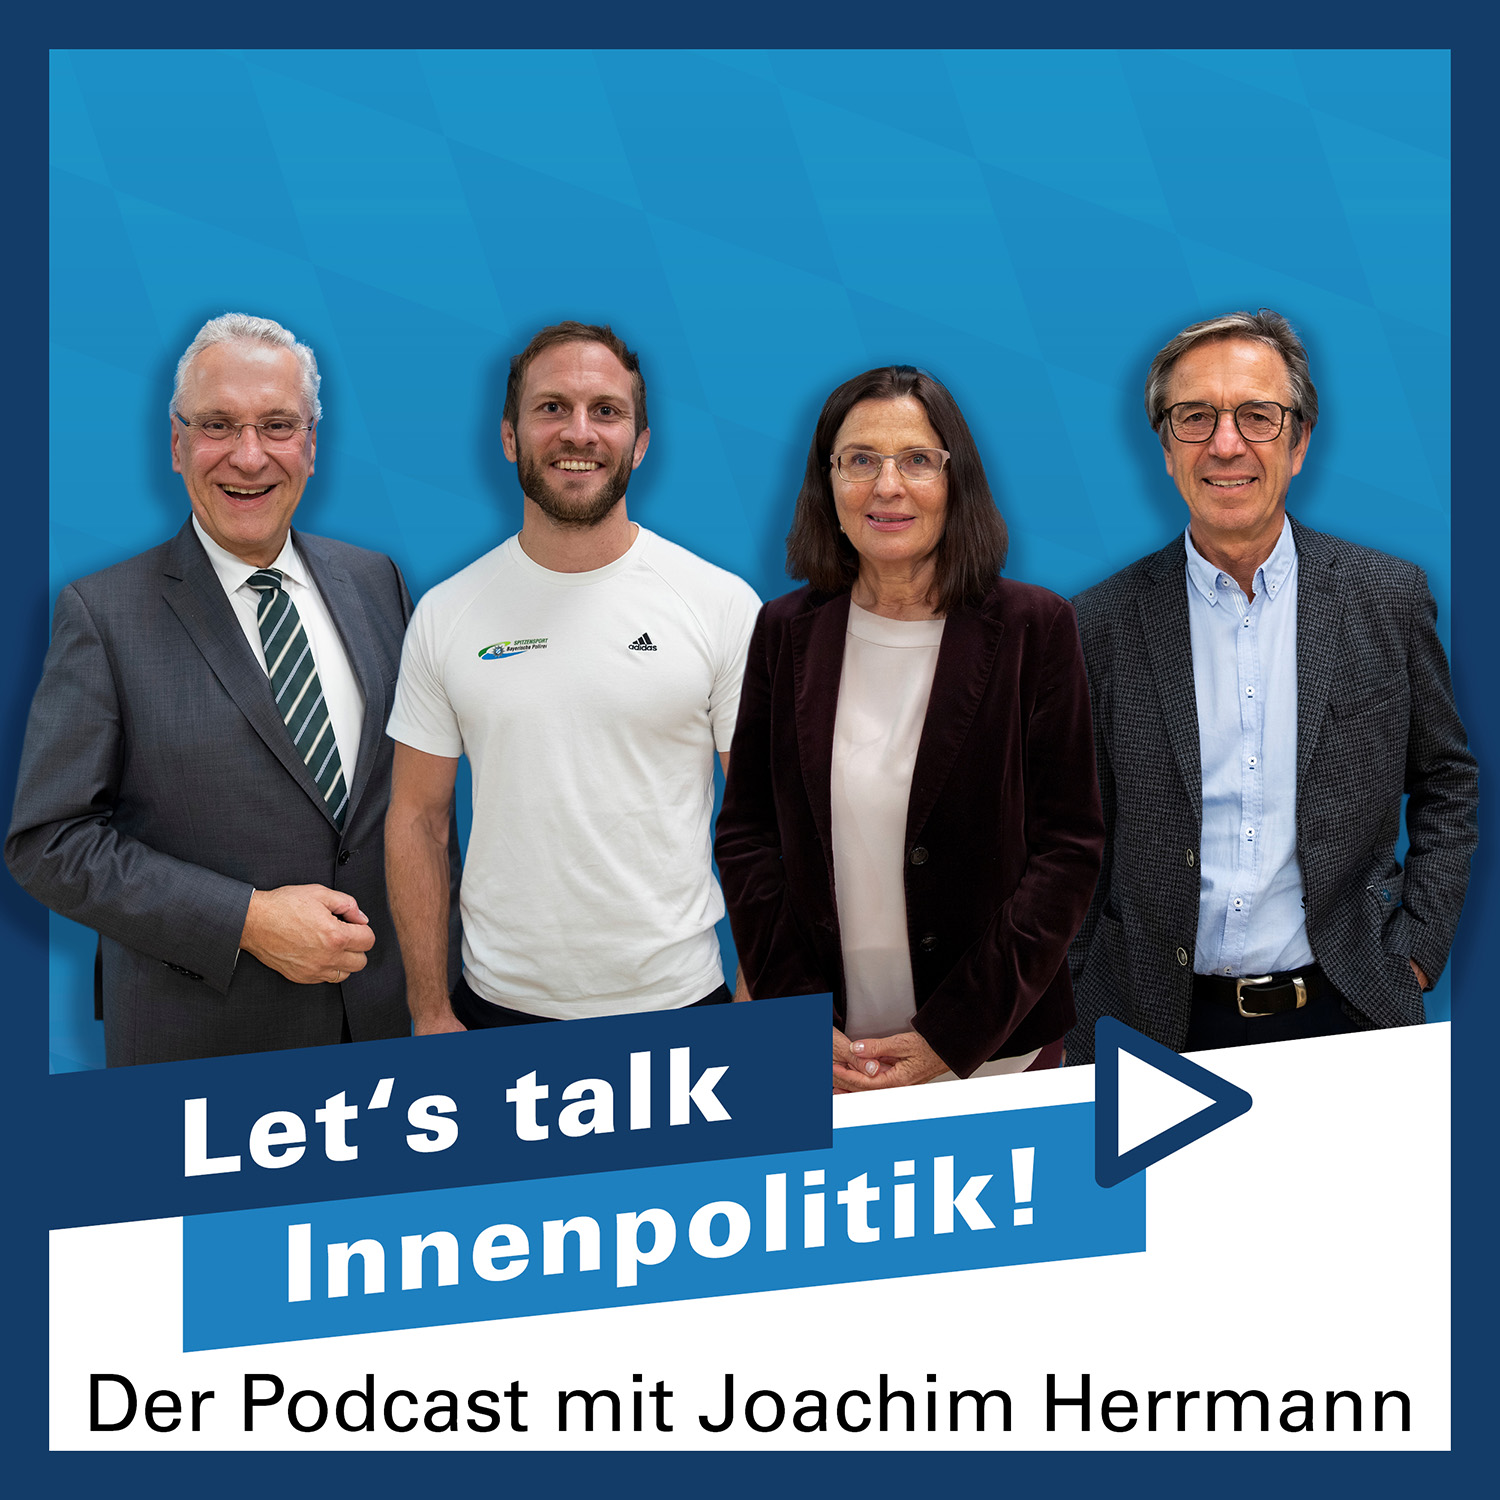 Unser Präsident Herbert John zu Gast bei &#8222;Let’s talk Innenpolitik&#8220; mit Joachim Herrmann – Unser Podcast